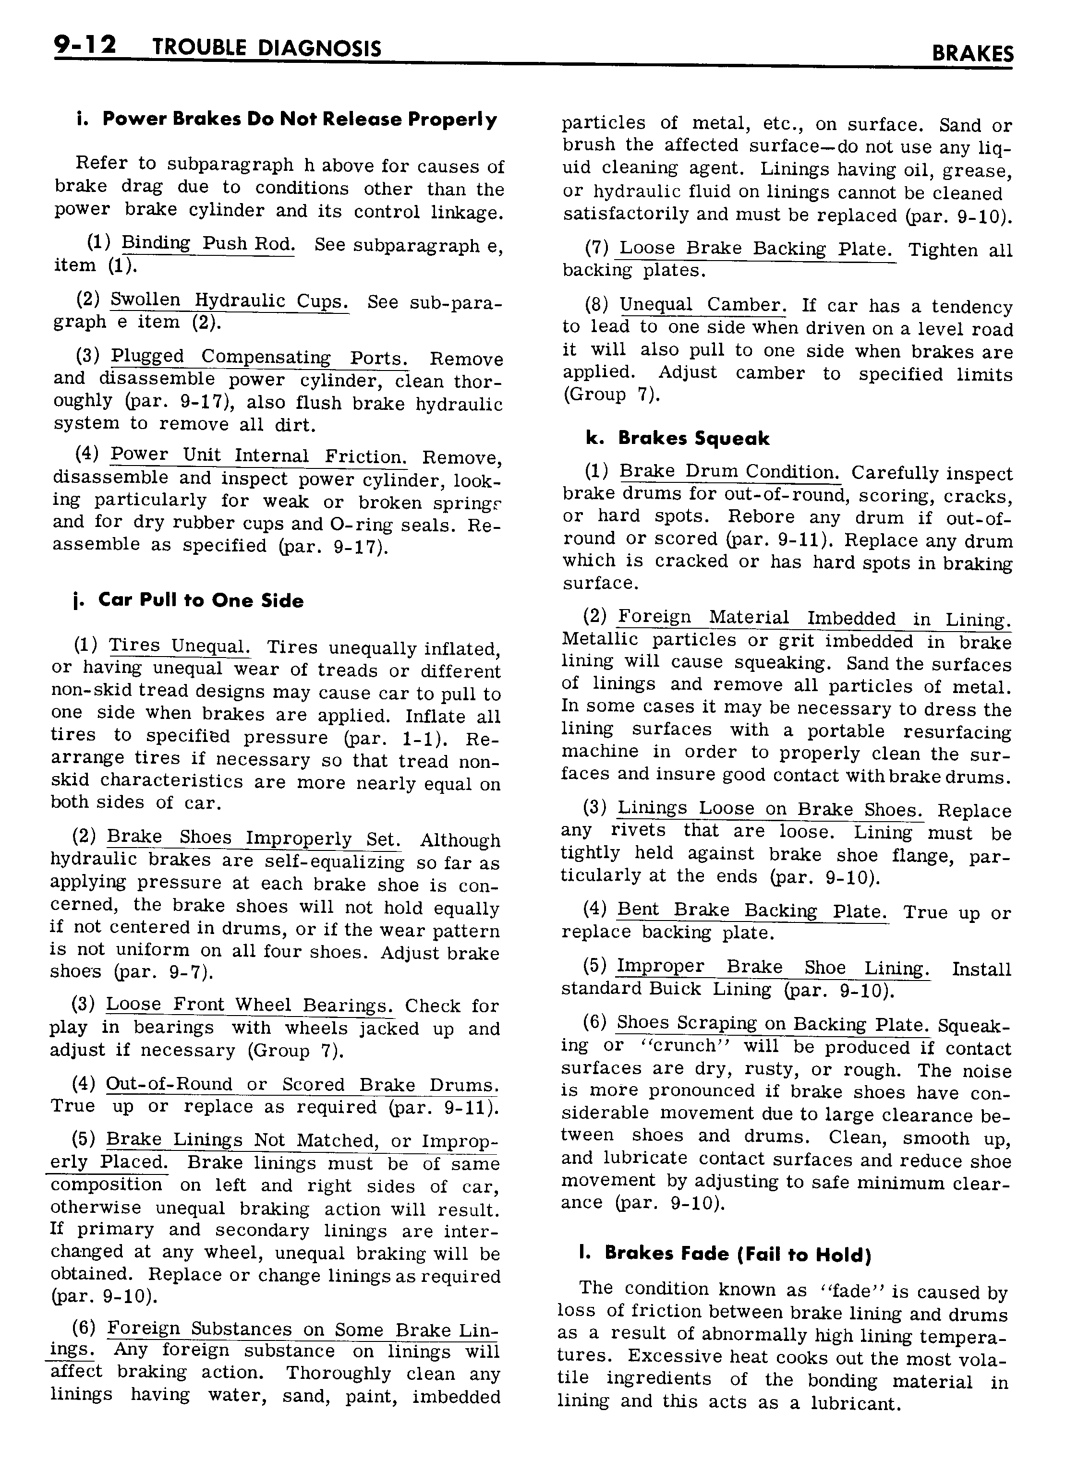 n_09 1961 Buick Shop Manual - Brakes-012-012.jpg